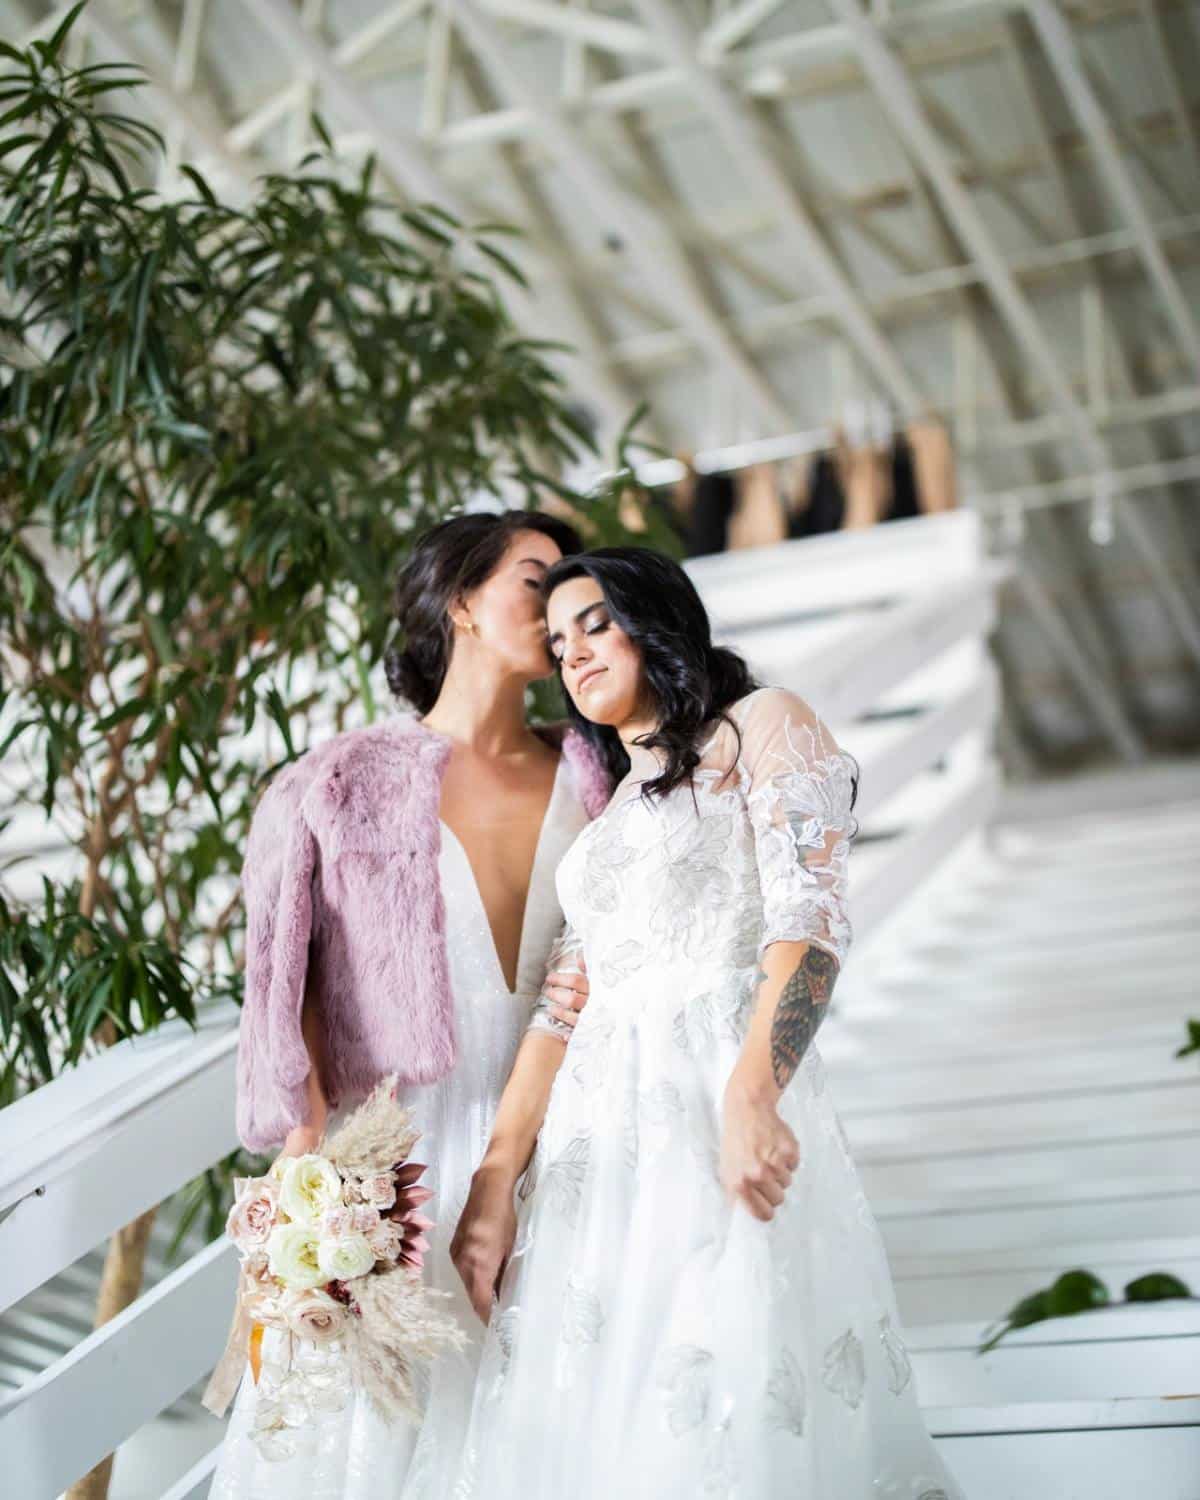 Foto de matrimonio de dos mujeres vestidas de novia